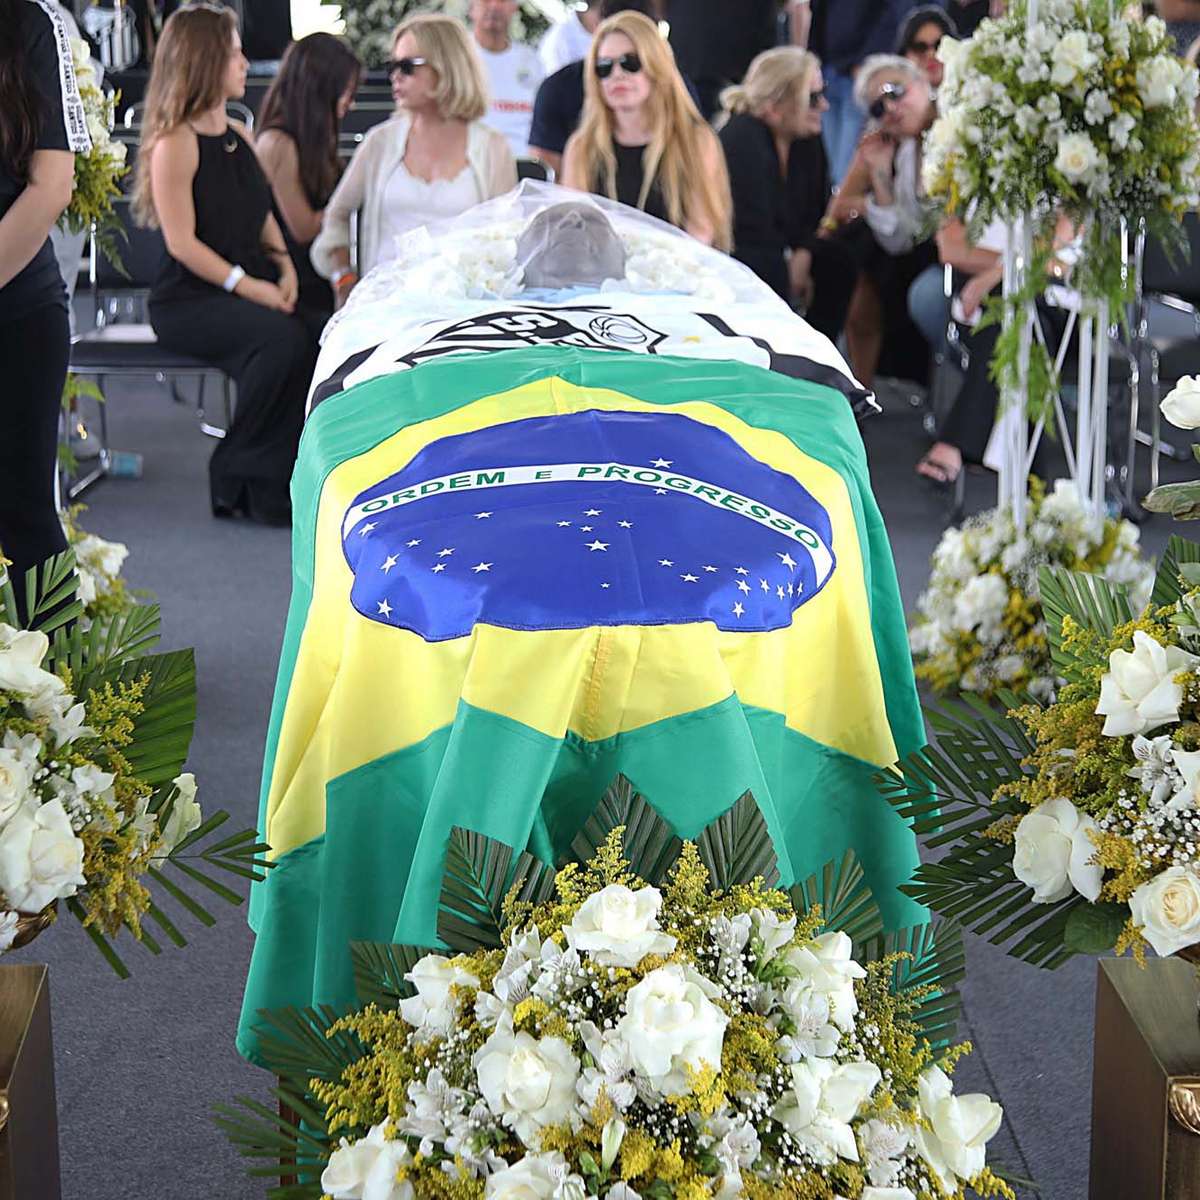 Corpo de jogador Sala chega à Argentina para funeral